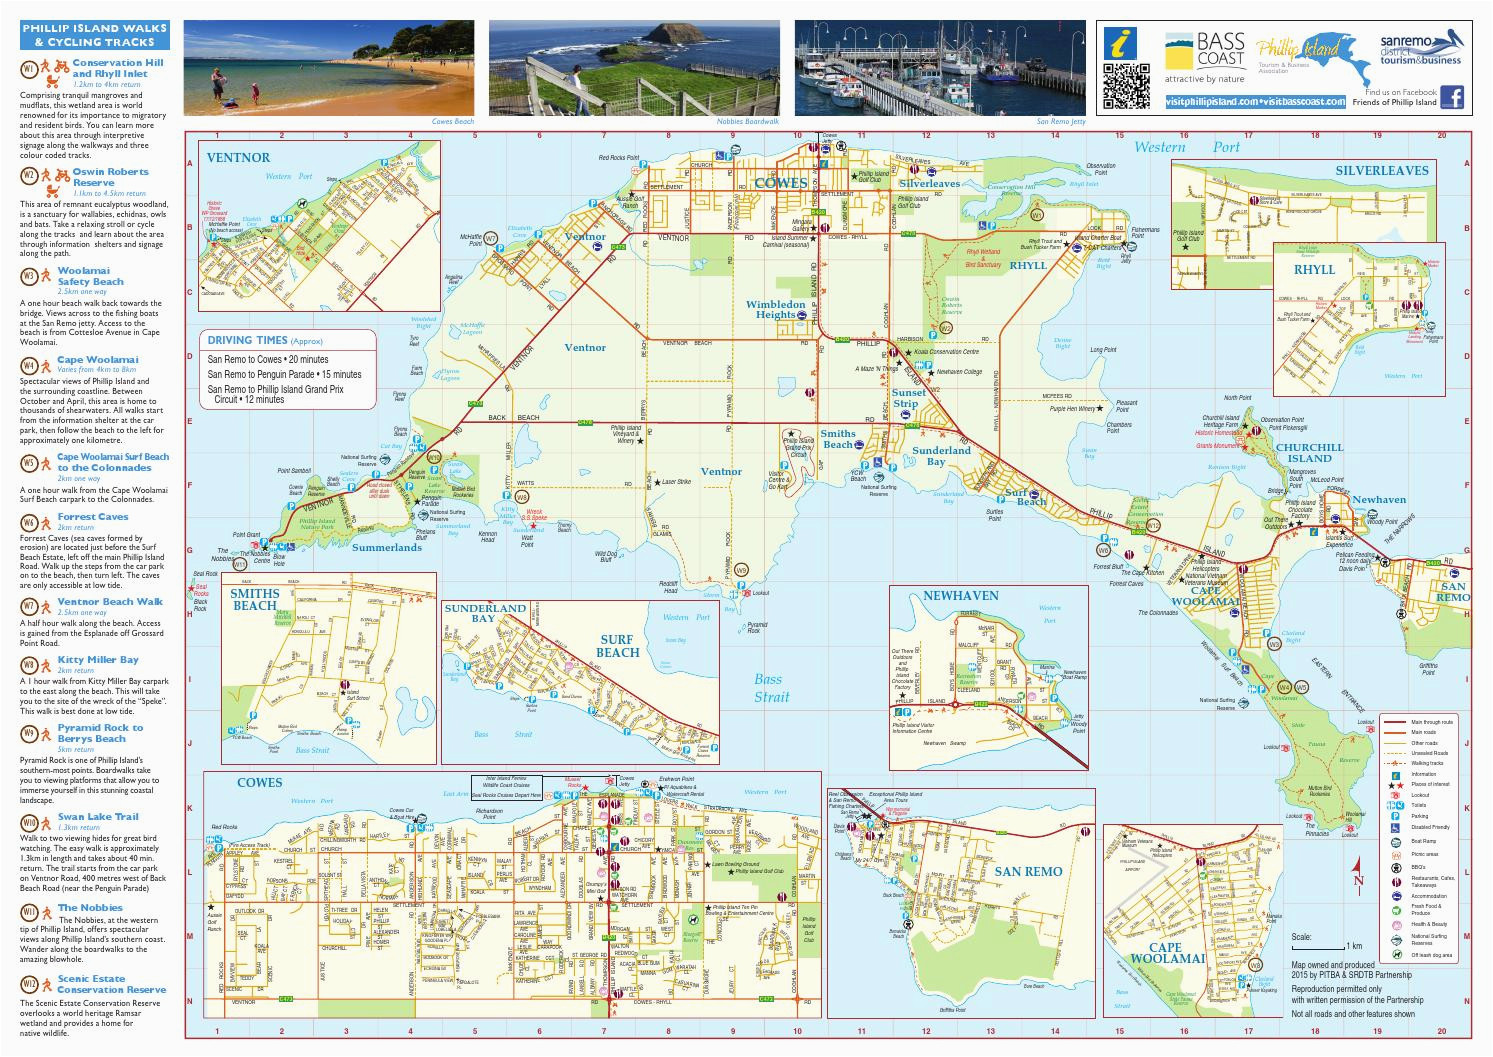 phillip island and san remo map 2016 by destination phillip island